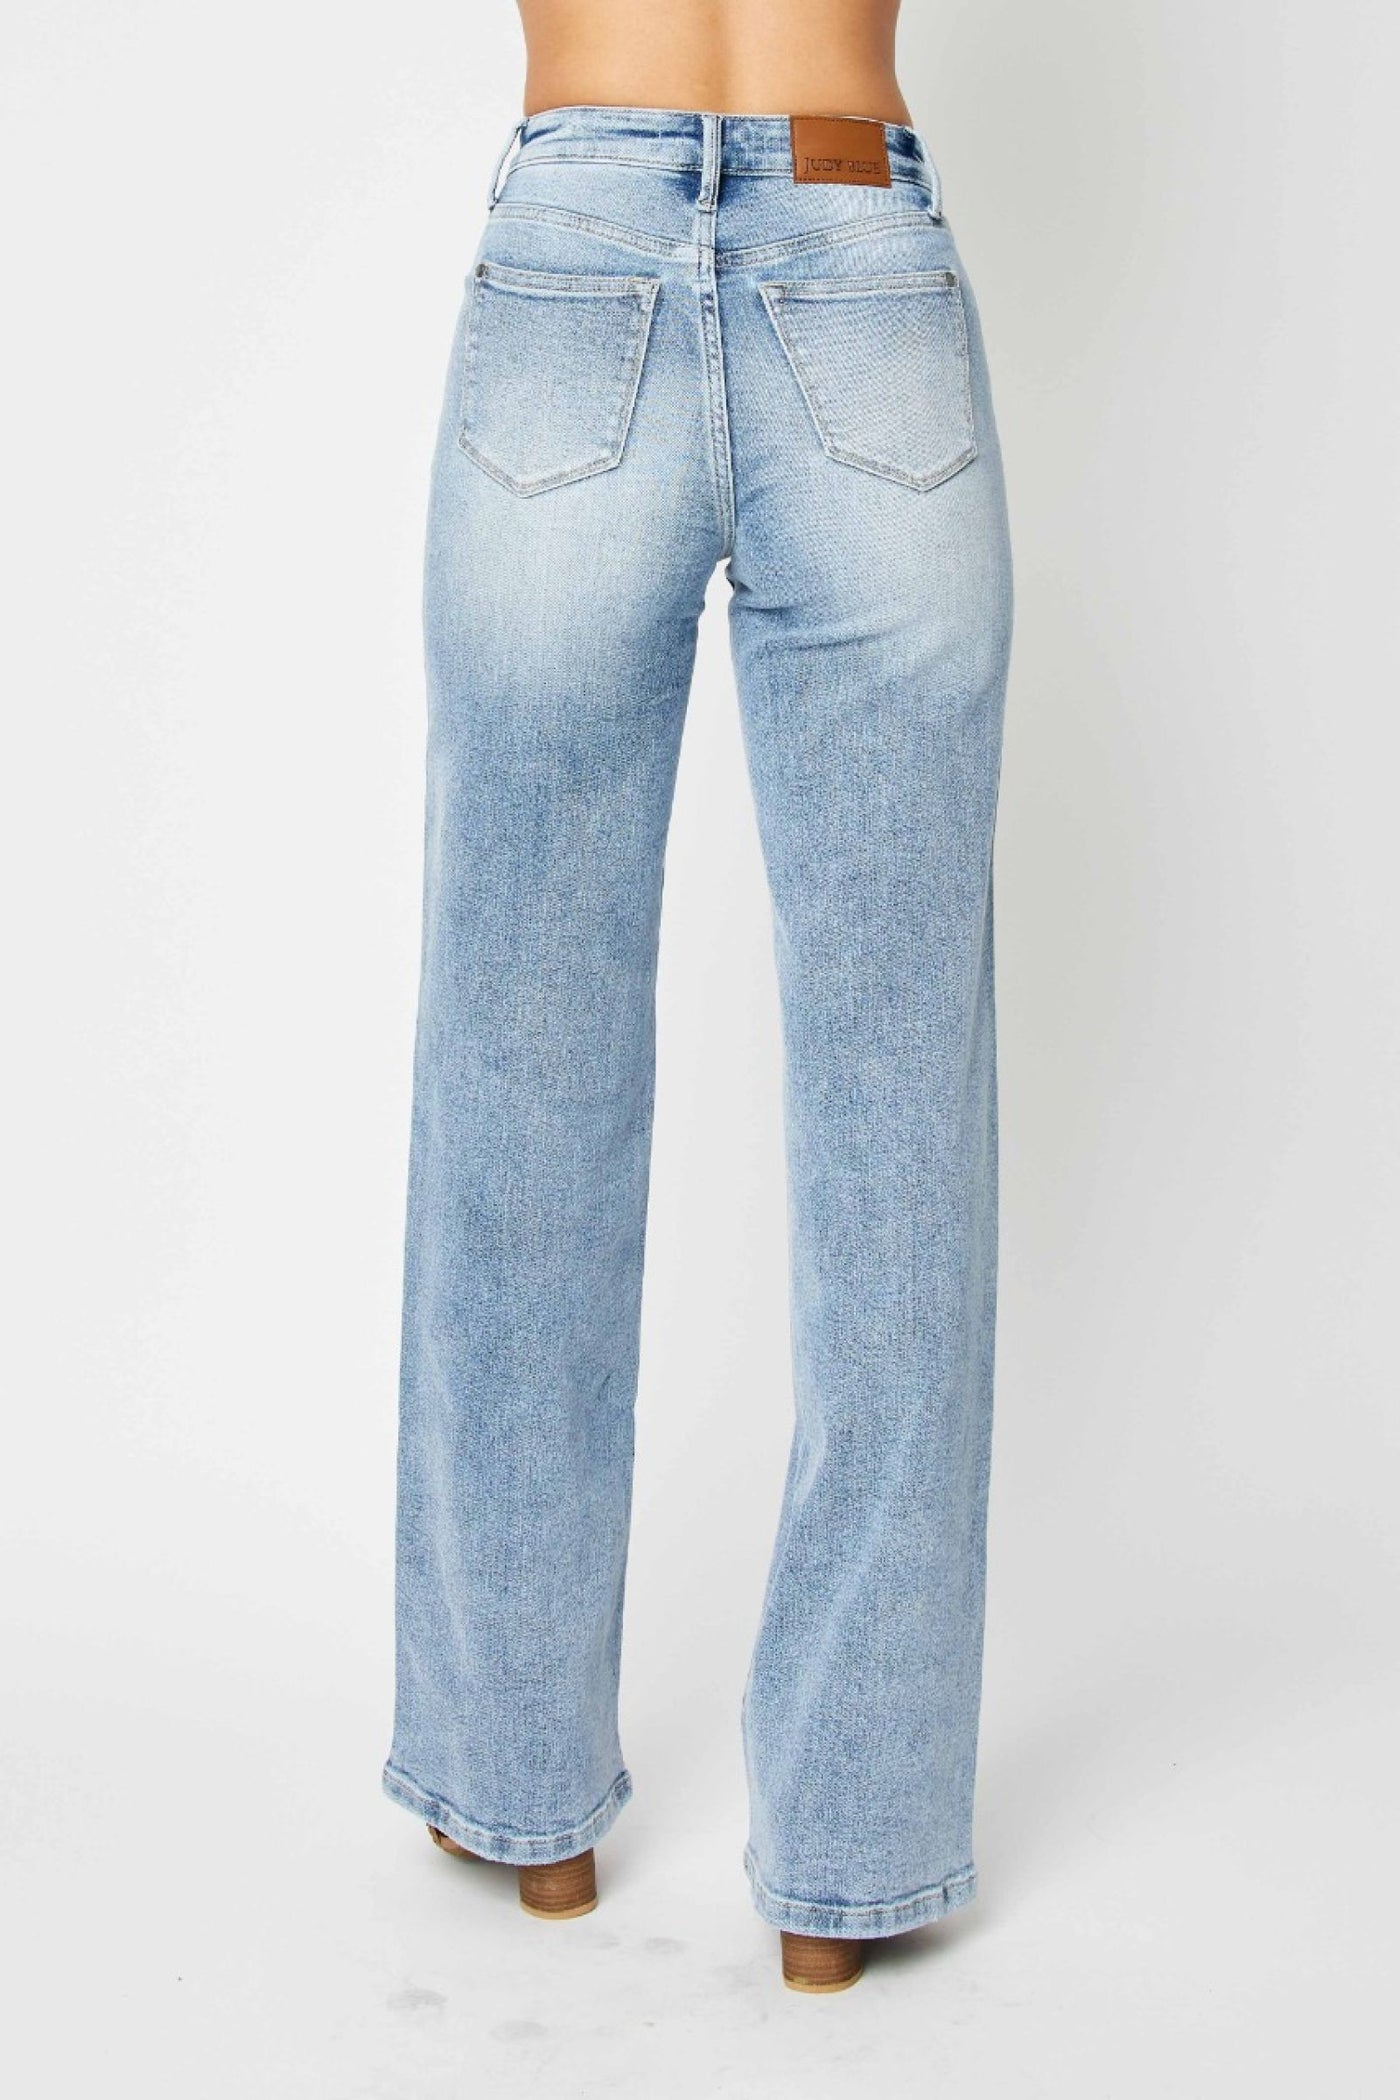 Judy Blue Jeans 88673